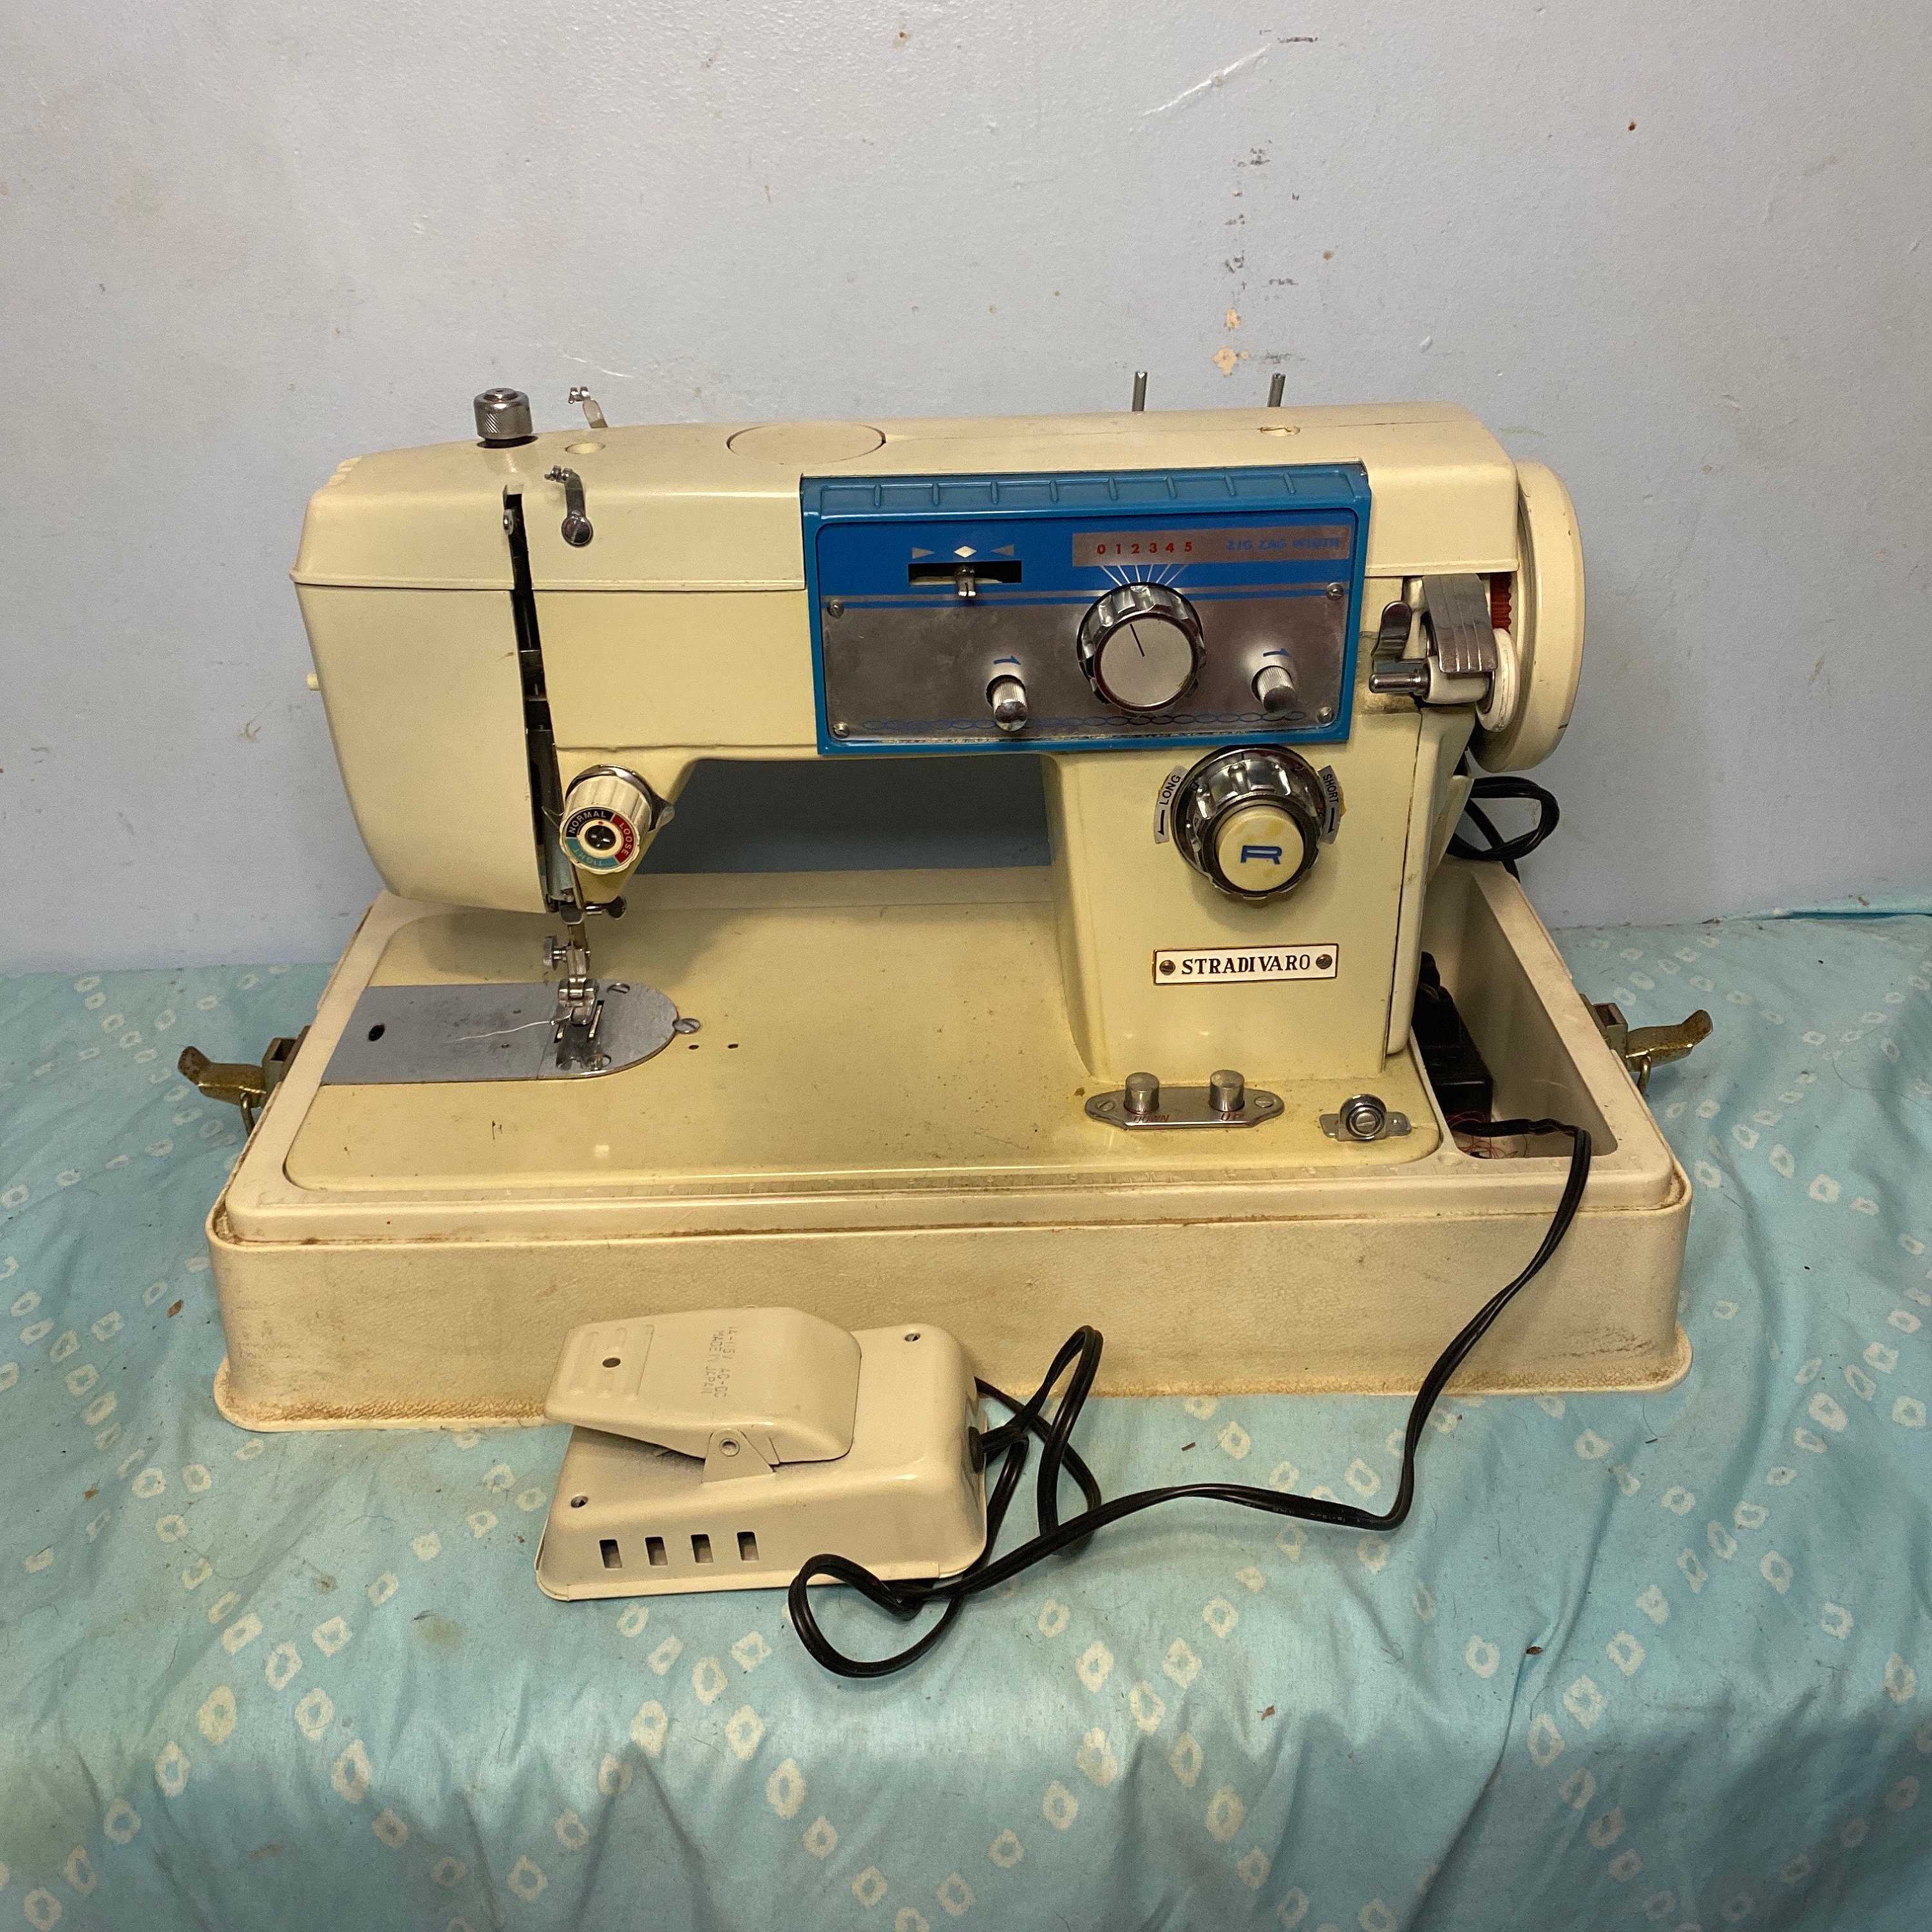 Stradivaro De Luxe Zig Zag Sewing Machine With Case. 